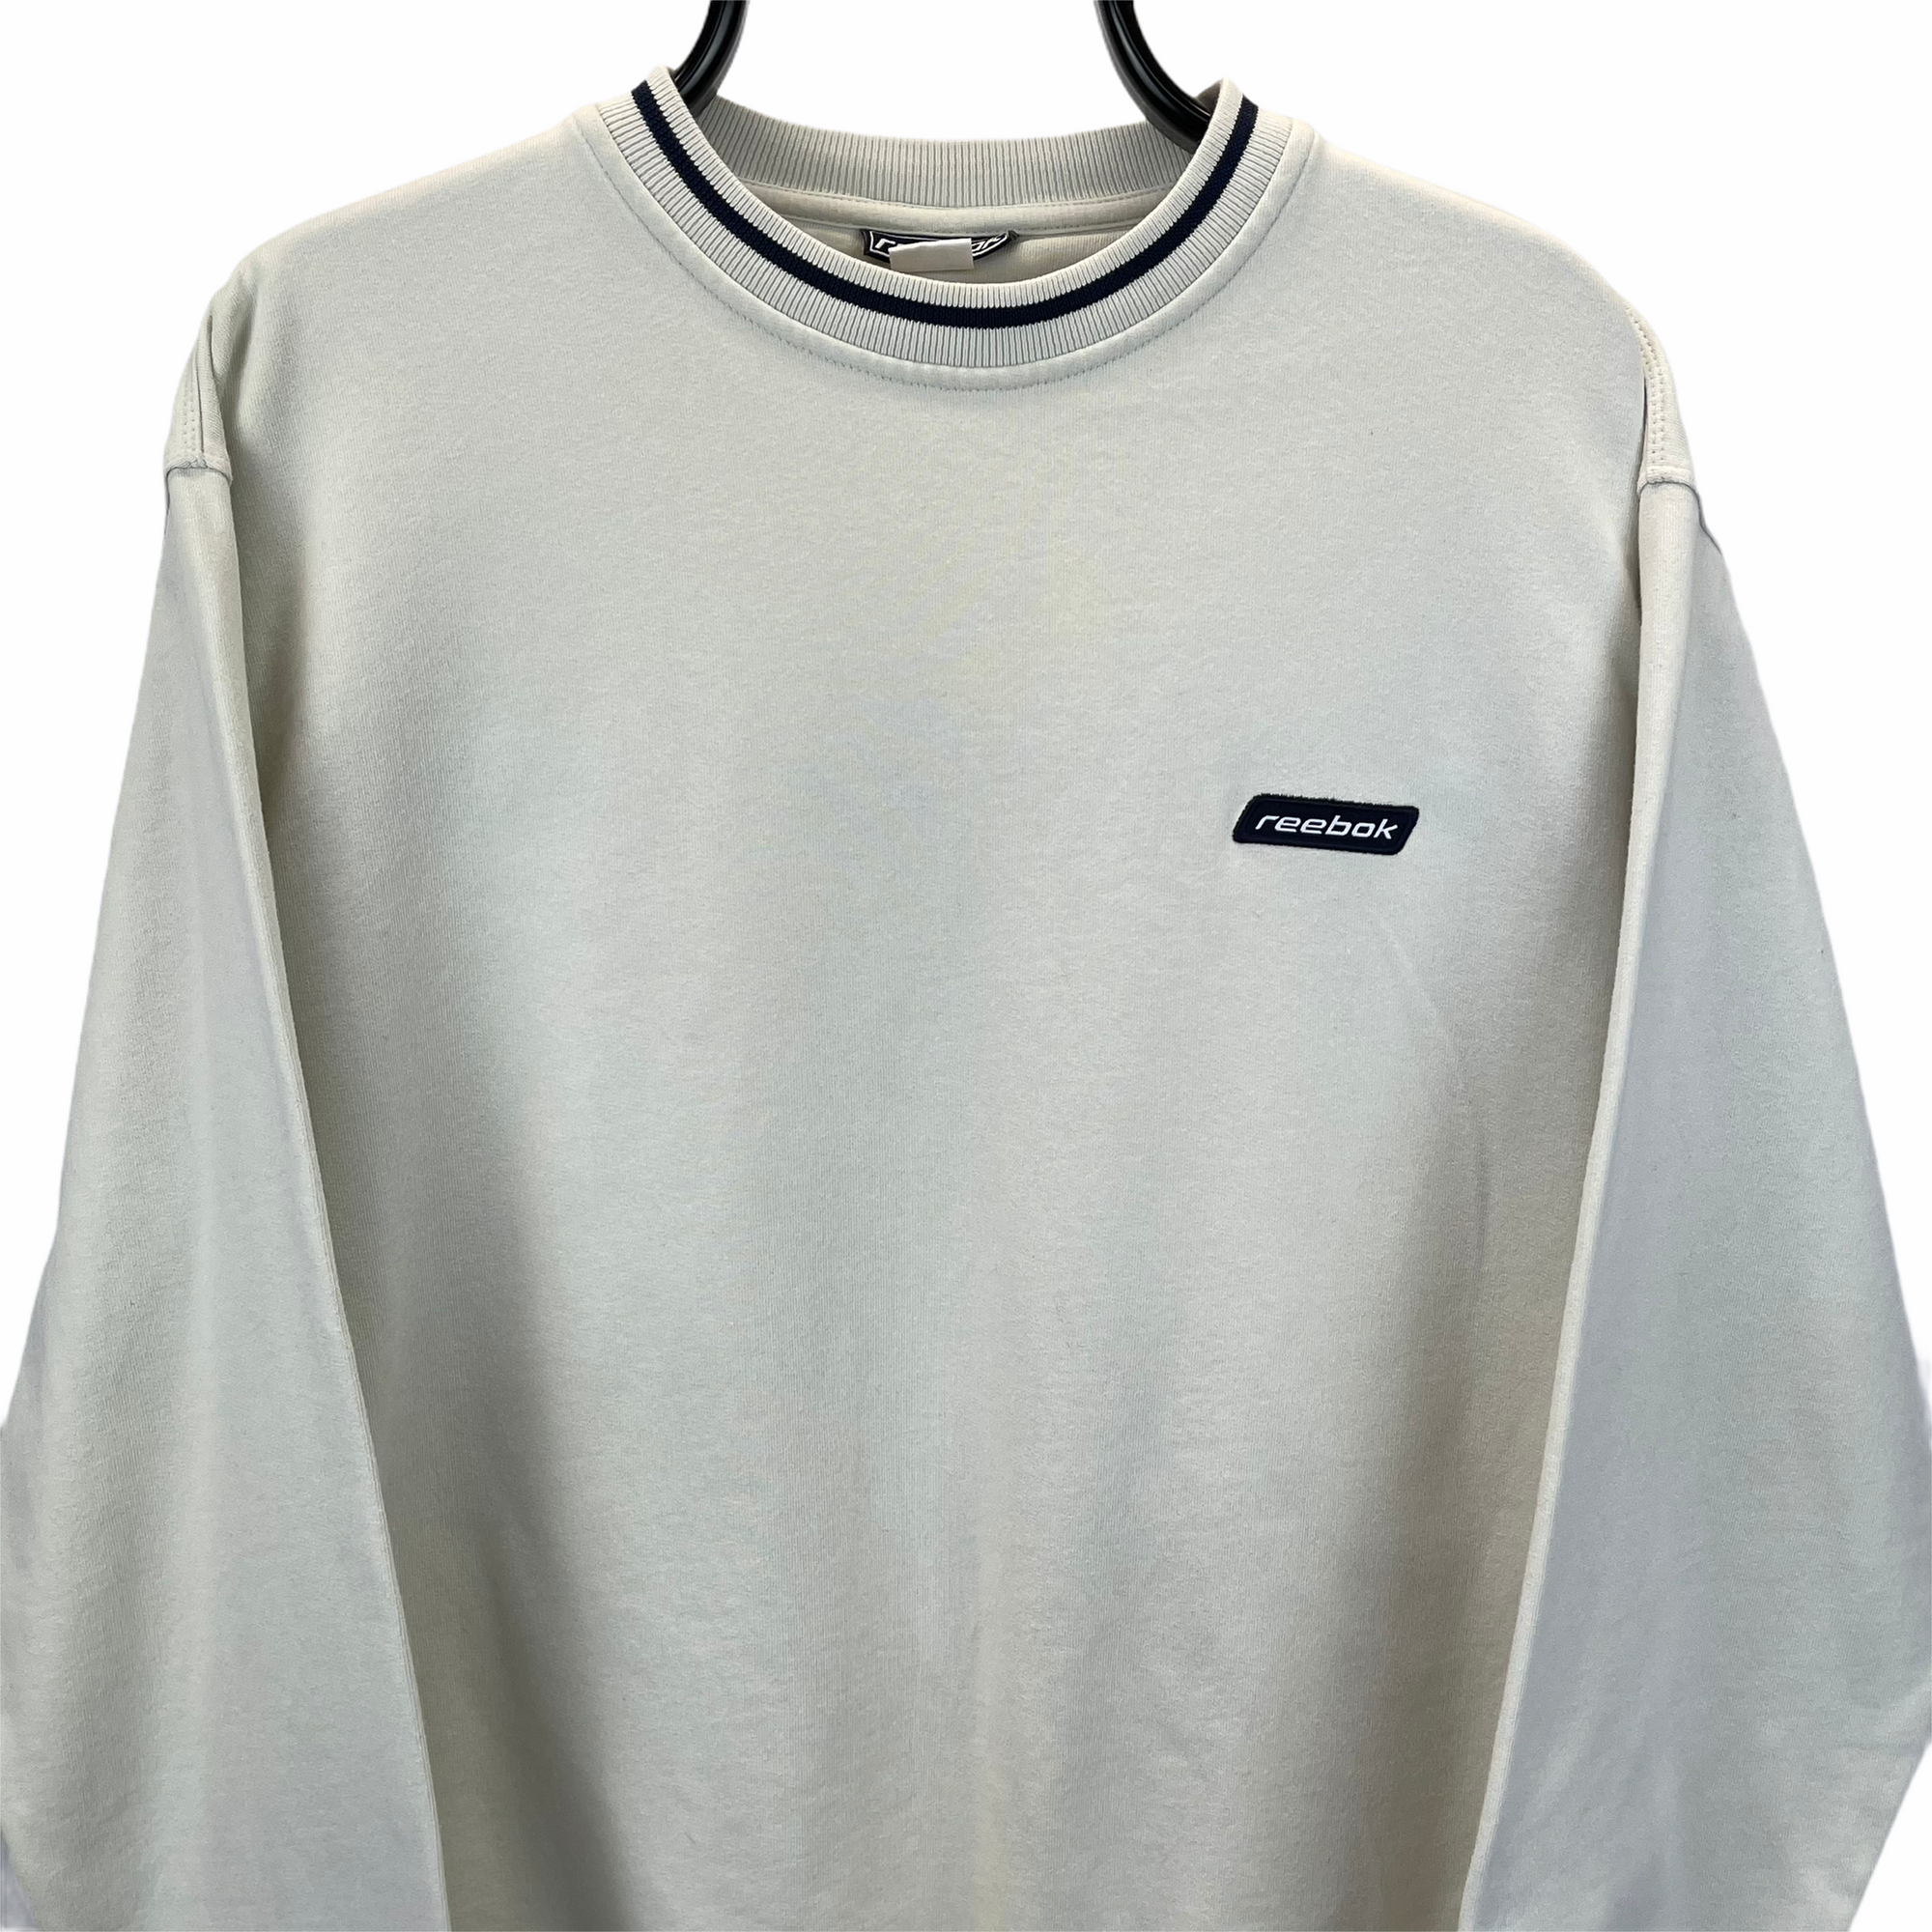 Vintage 90s Reebok Small Spellout Sweatshirt in Cream - Men's Medium/Women's Large